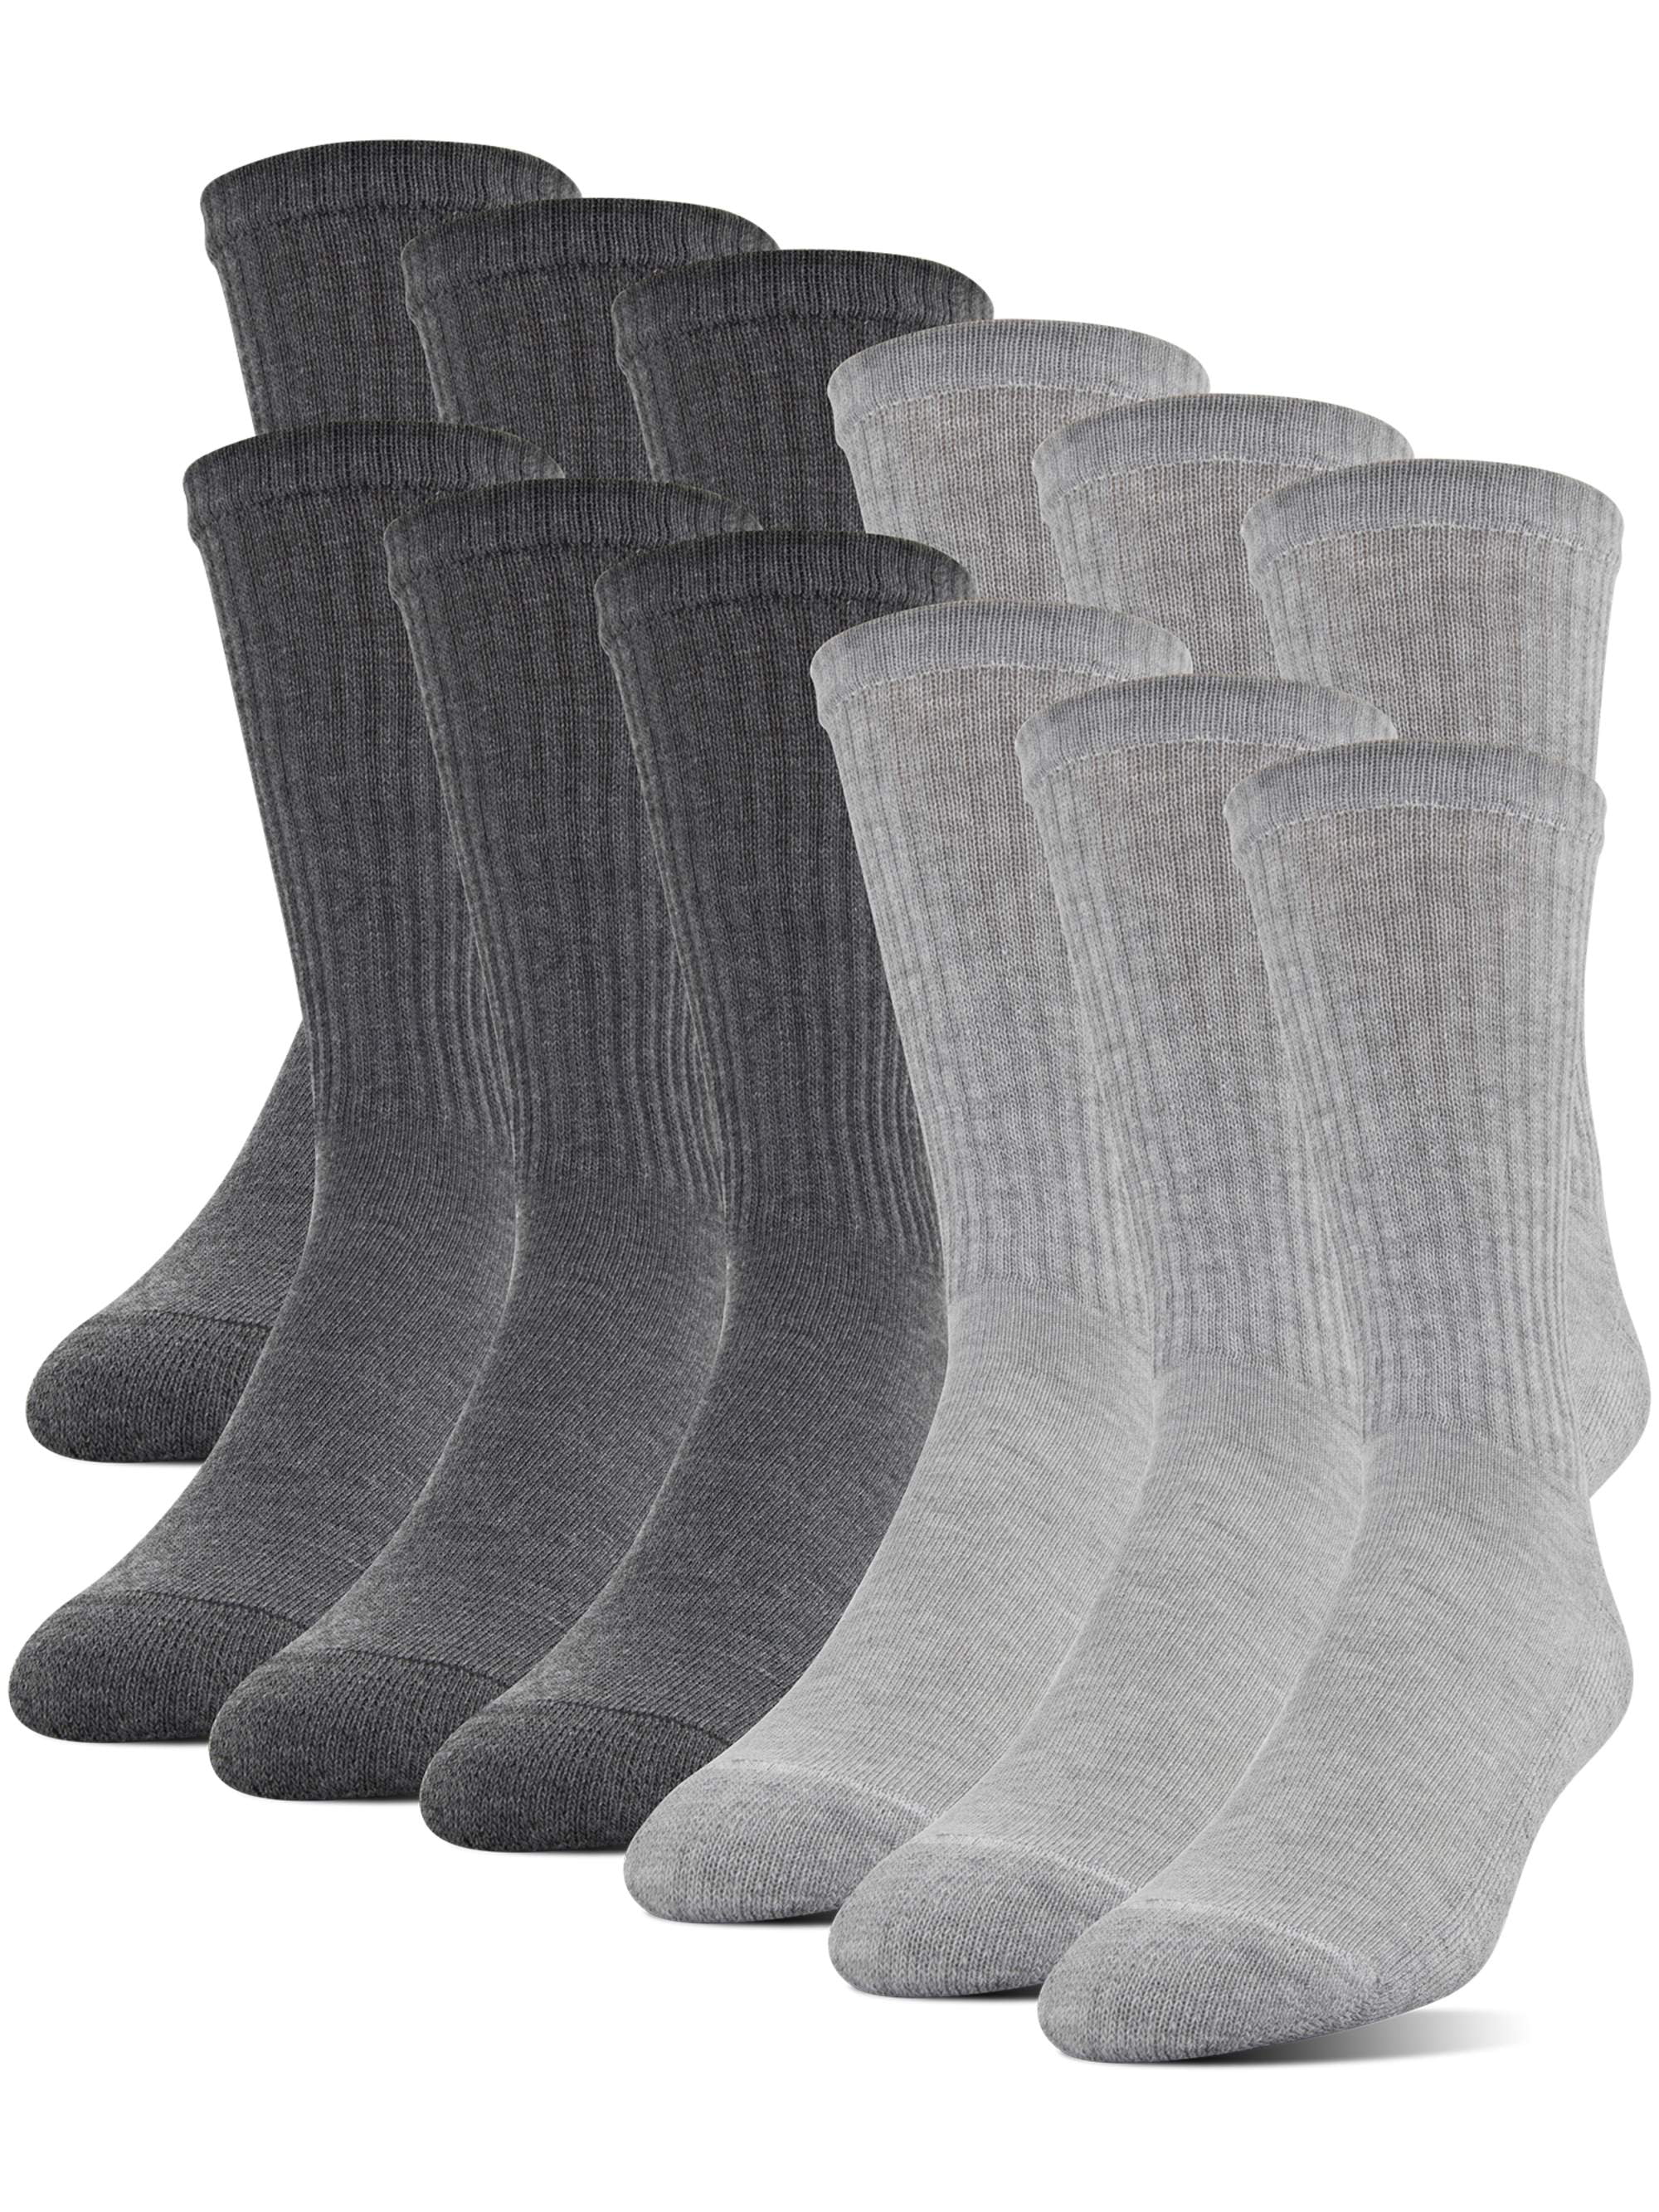 Adult Winter Pattern Cushion Crew Socks 